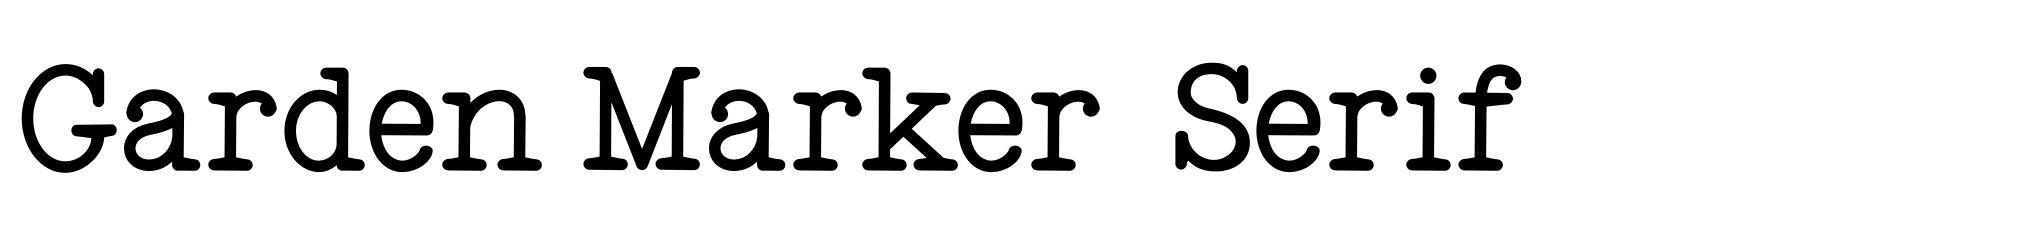 Garden Marker  Serif image